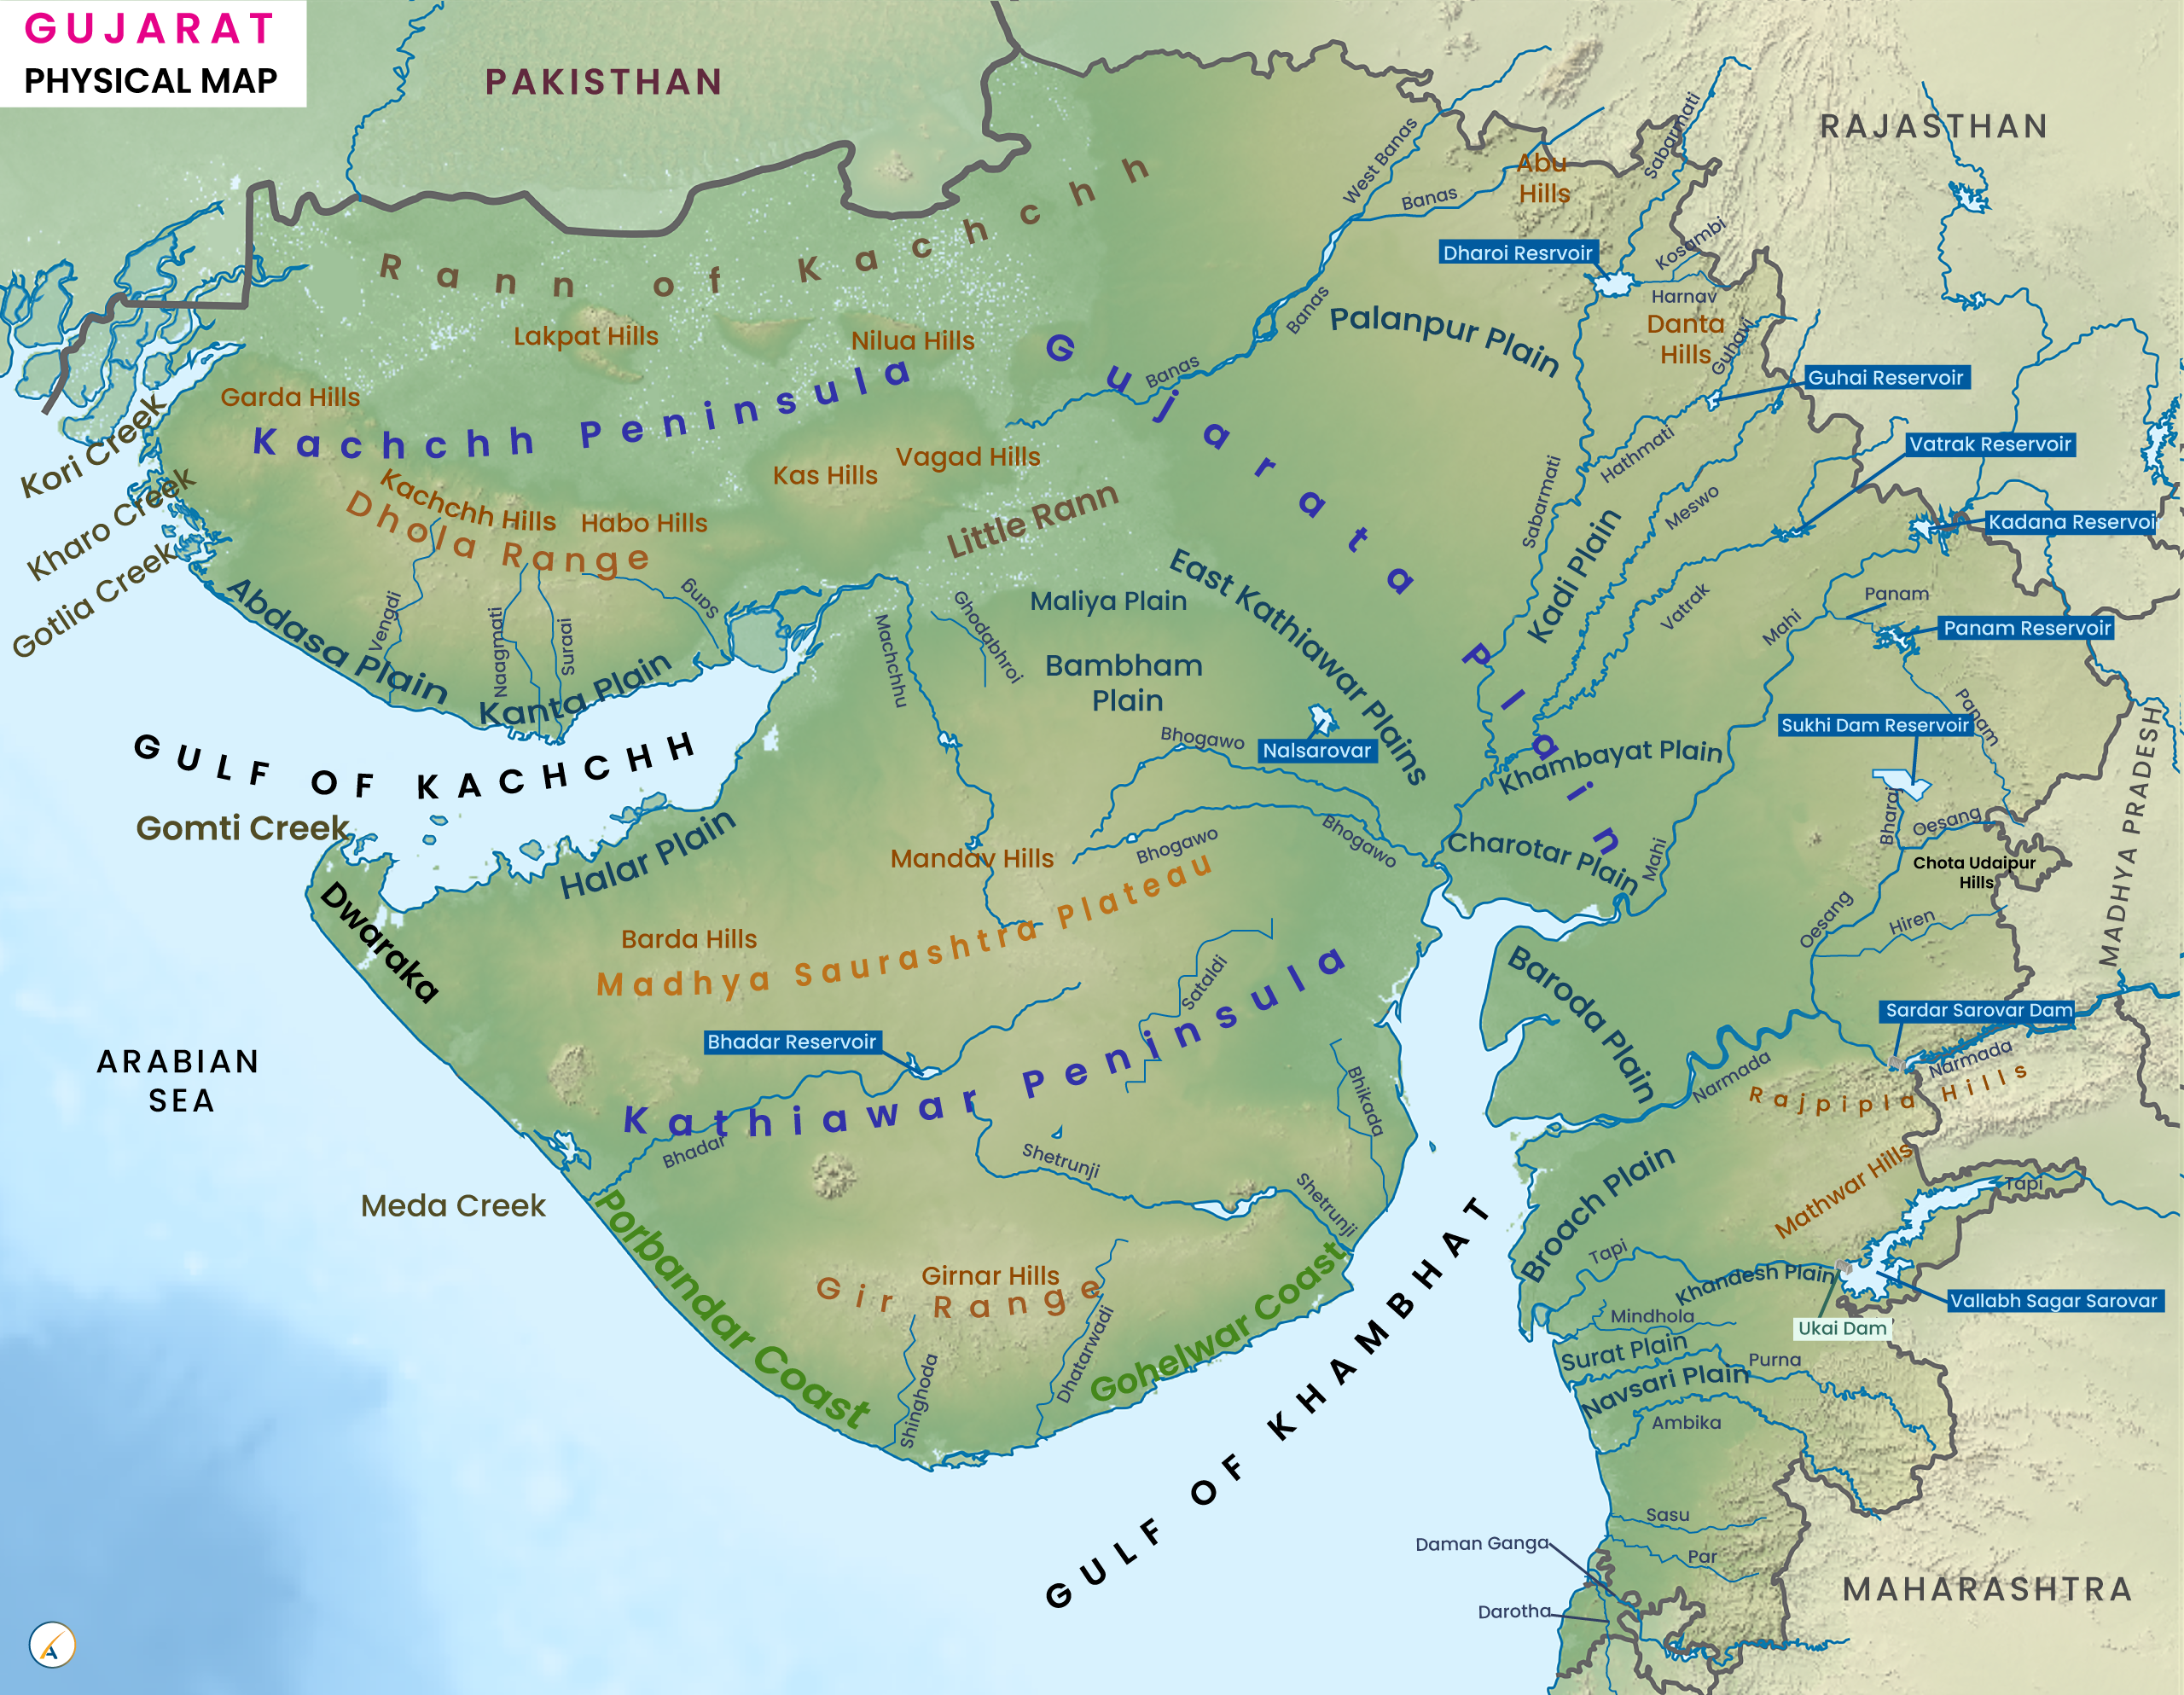 Gujarat Physical Map